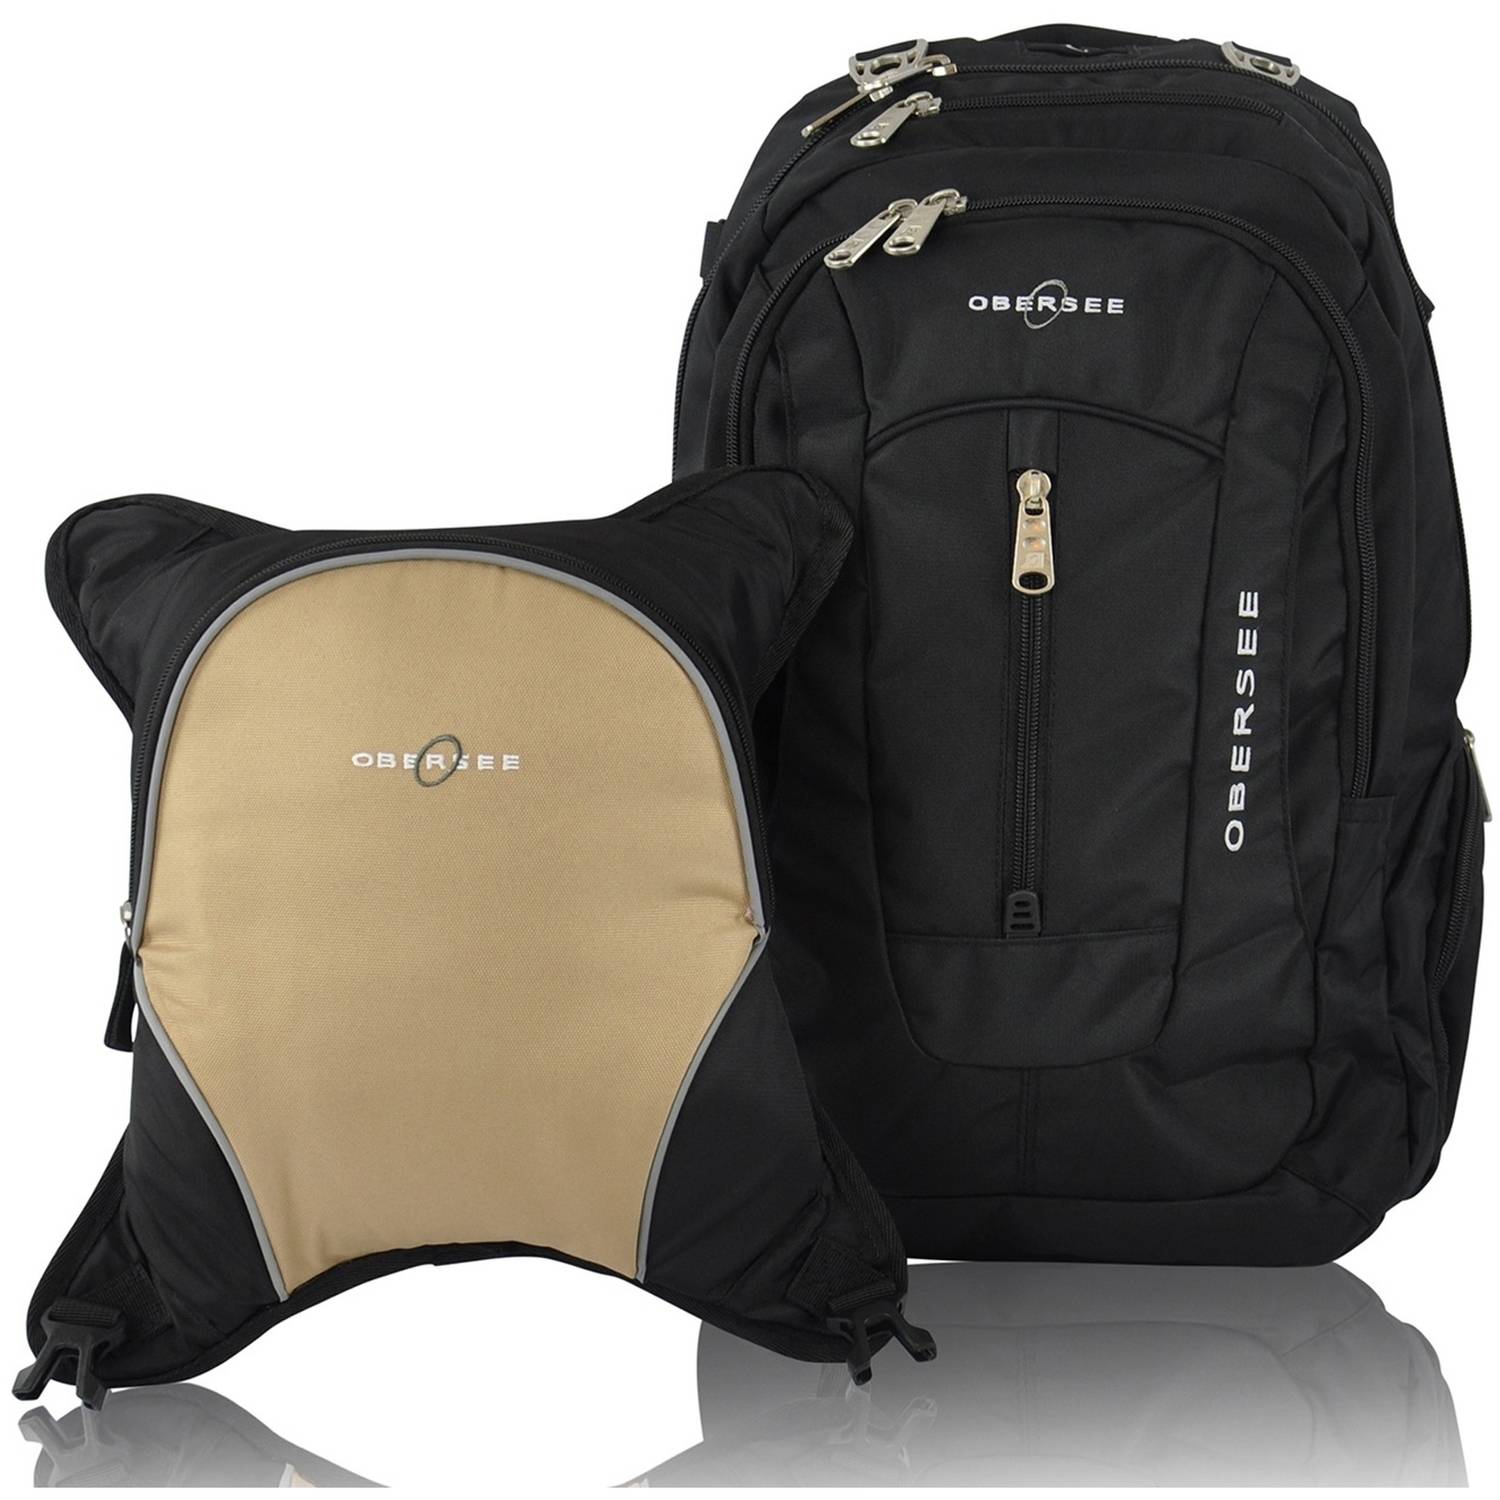 Obersee Bern Diaper Bag Backpack and Cooler, Black/Sand - image 1 of 10